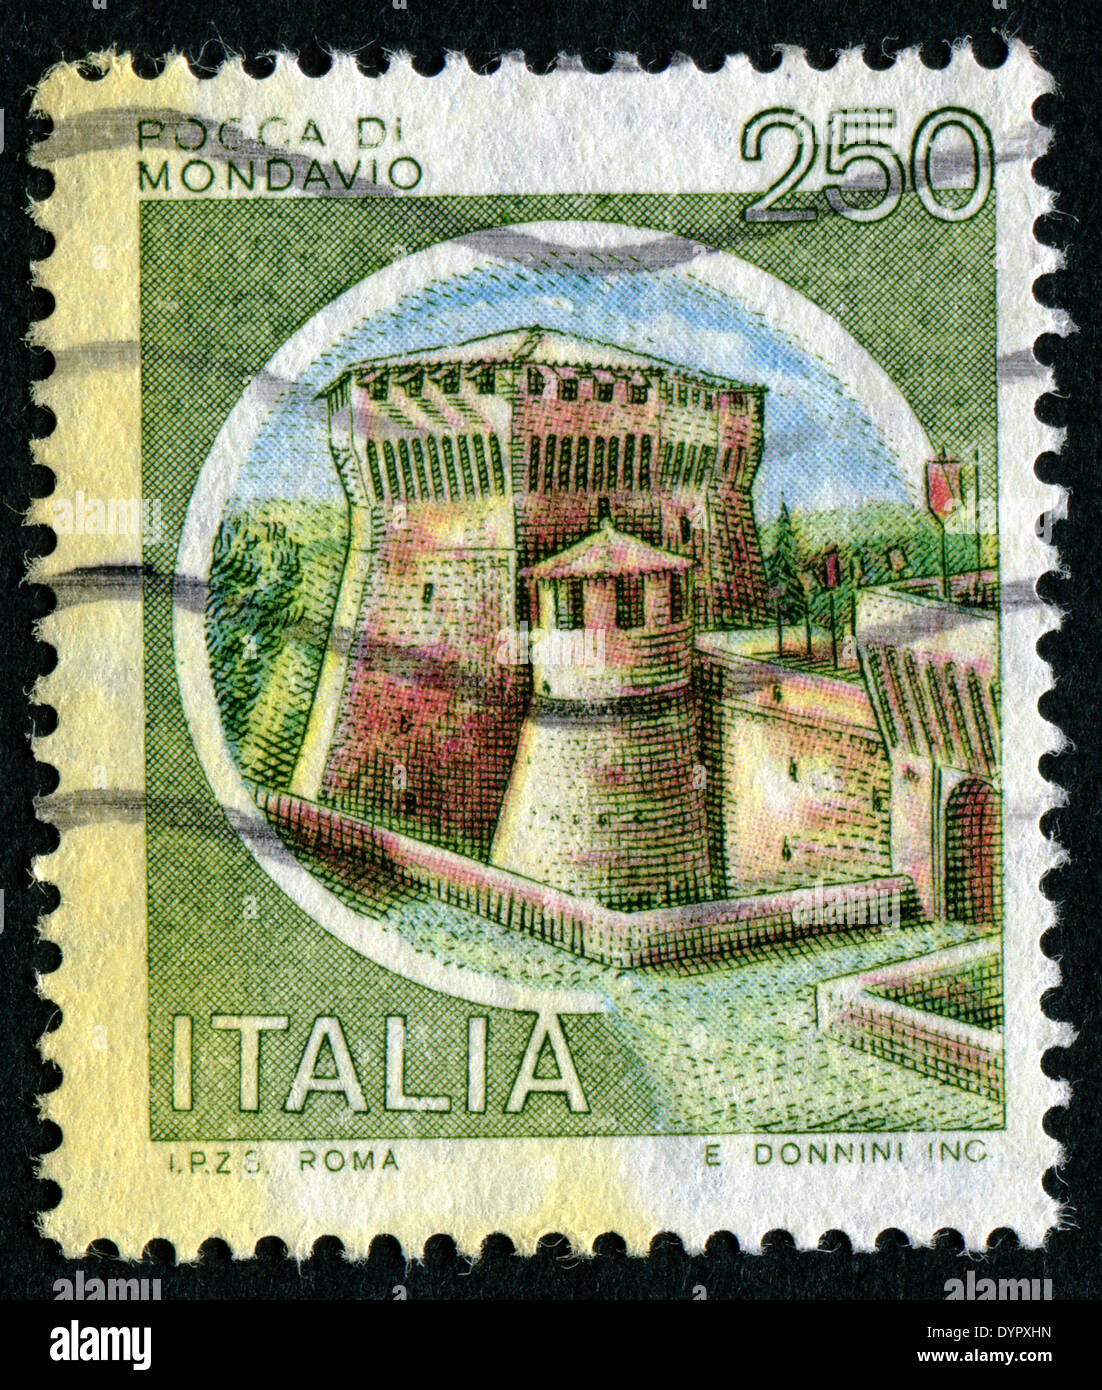 ITALY - CIRCA 1980: A stamp printed in Italy from the 'Castles' issue shows Rocca di Mondavio, Pesaro, circa 1980. Stock Photo